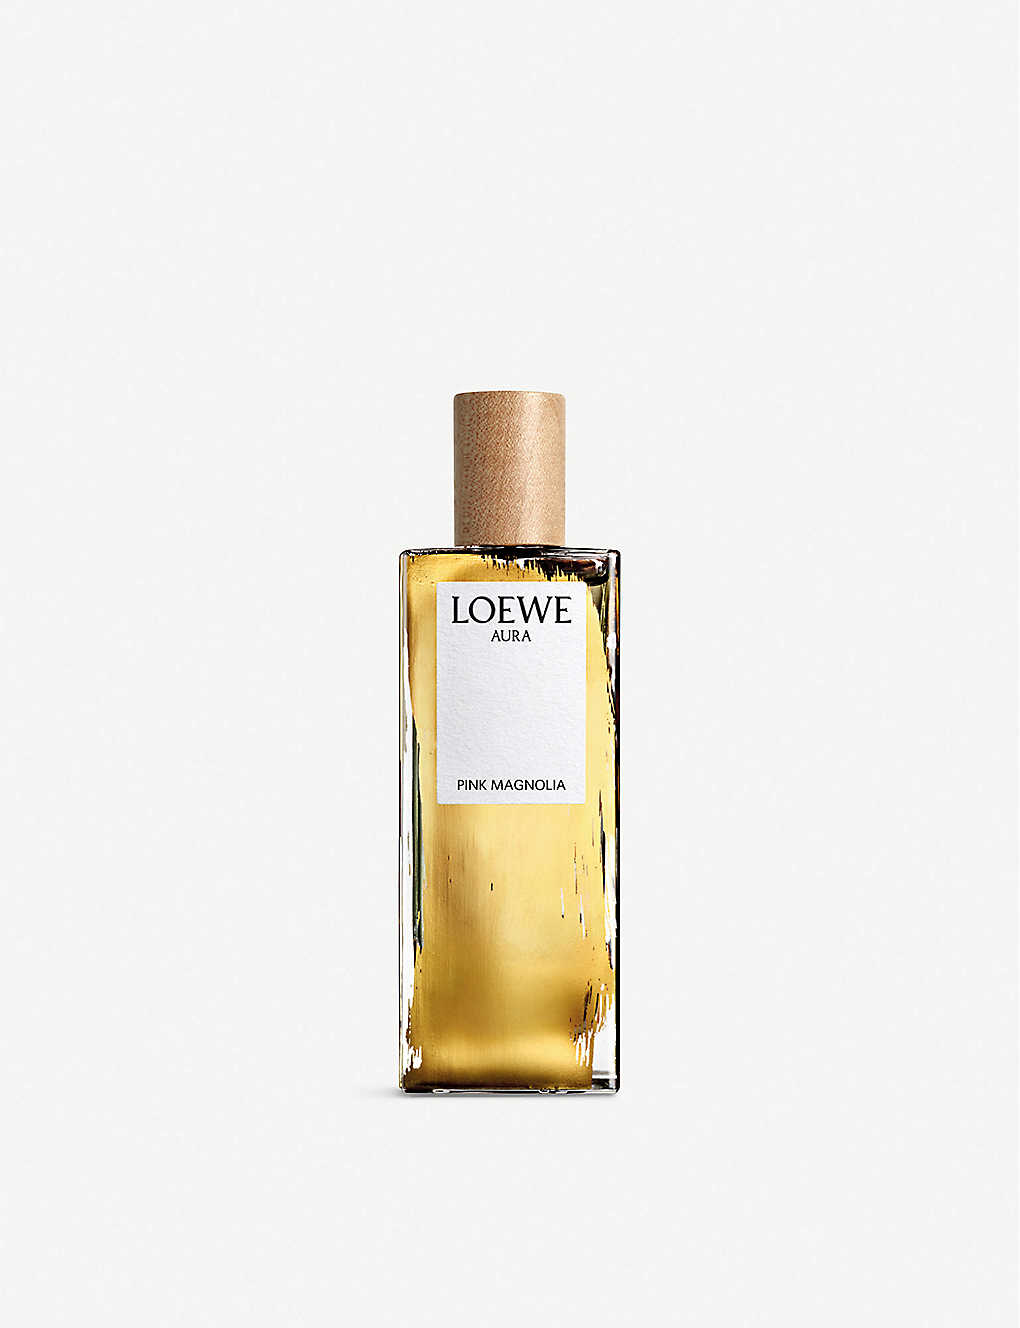 LOEWE - Aura Pink Magnolia eau de parfum 100ml | Selfridges.com